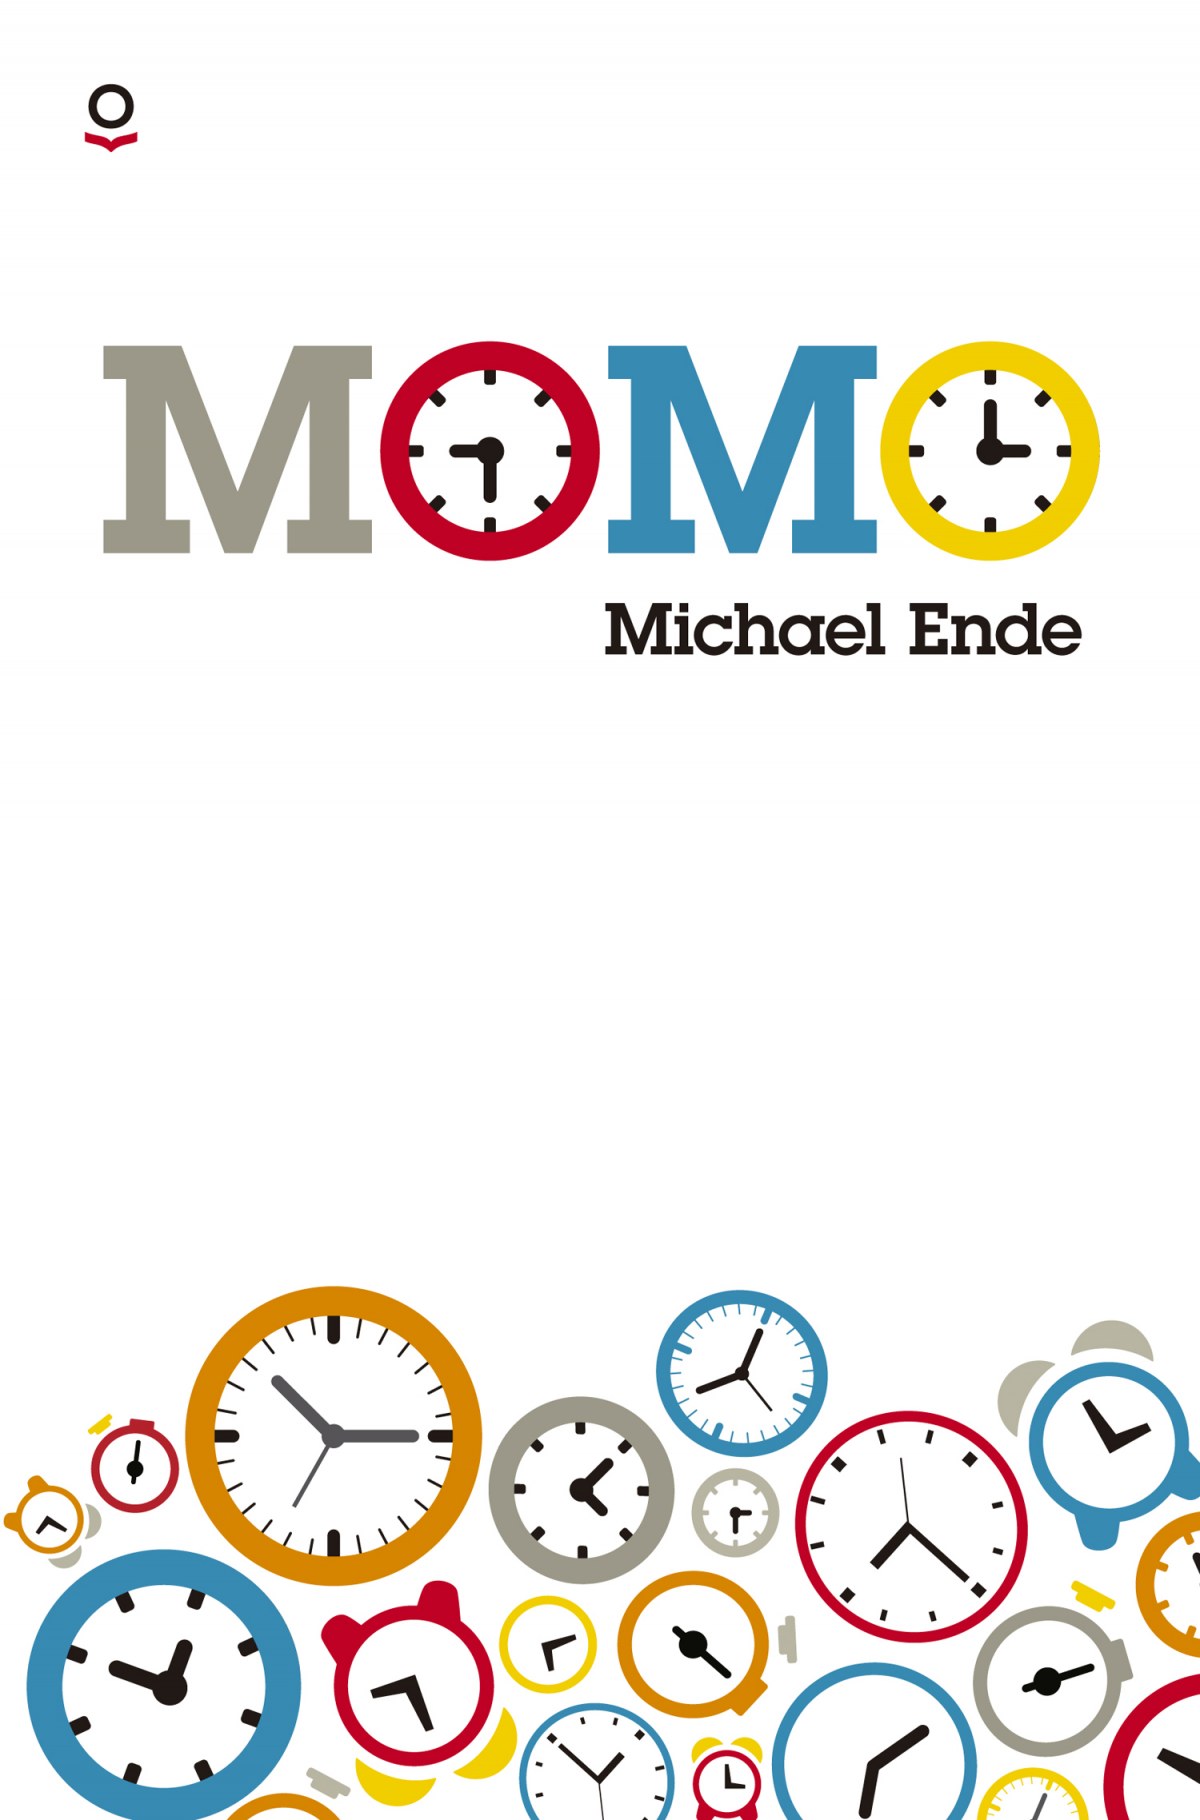 Momo - Ende, Michael